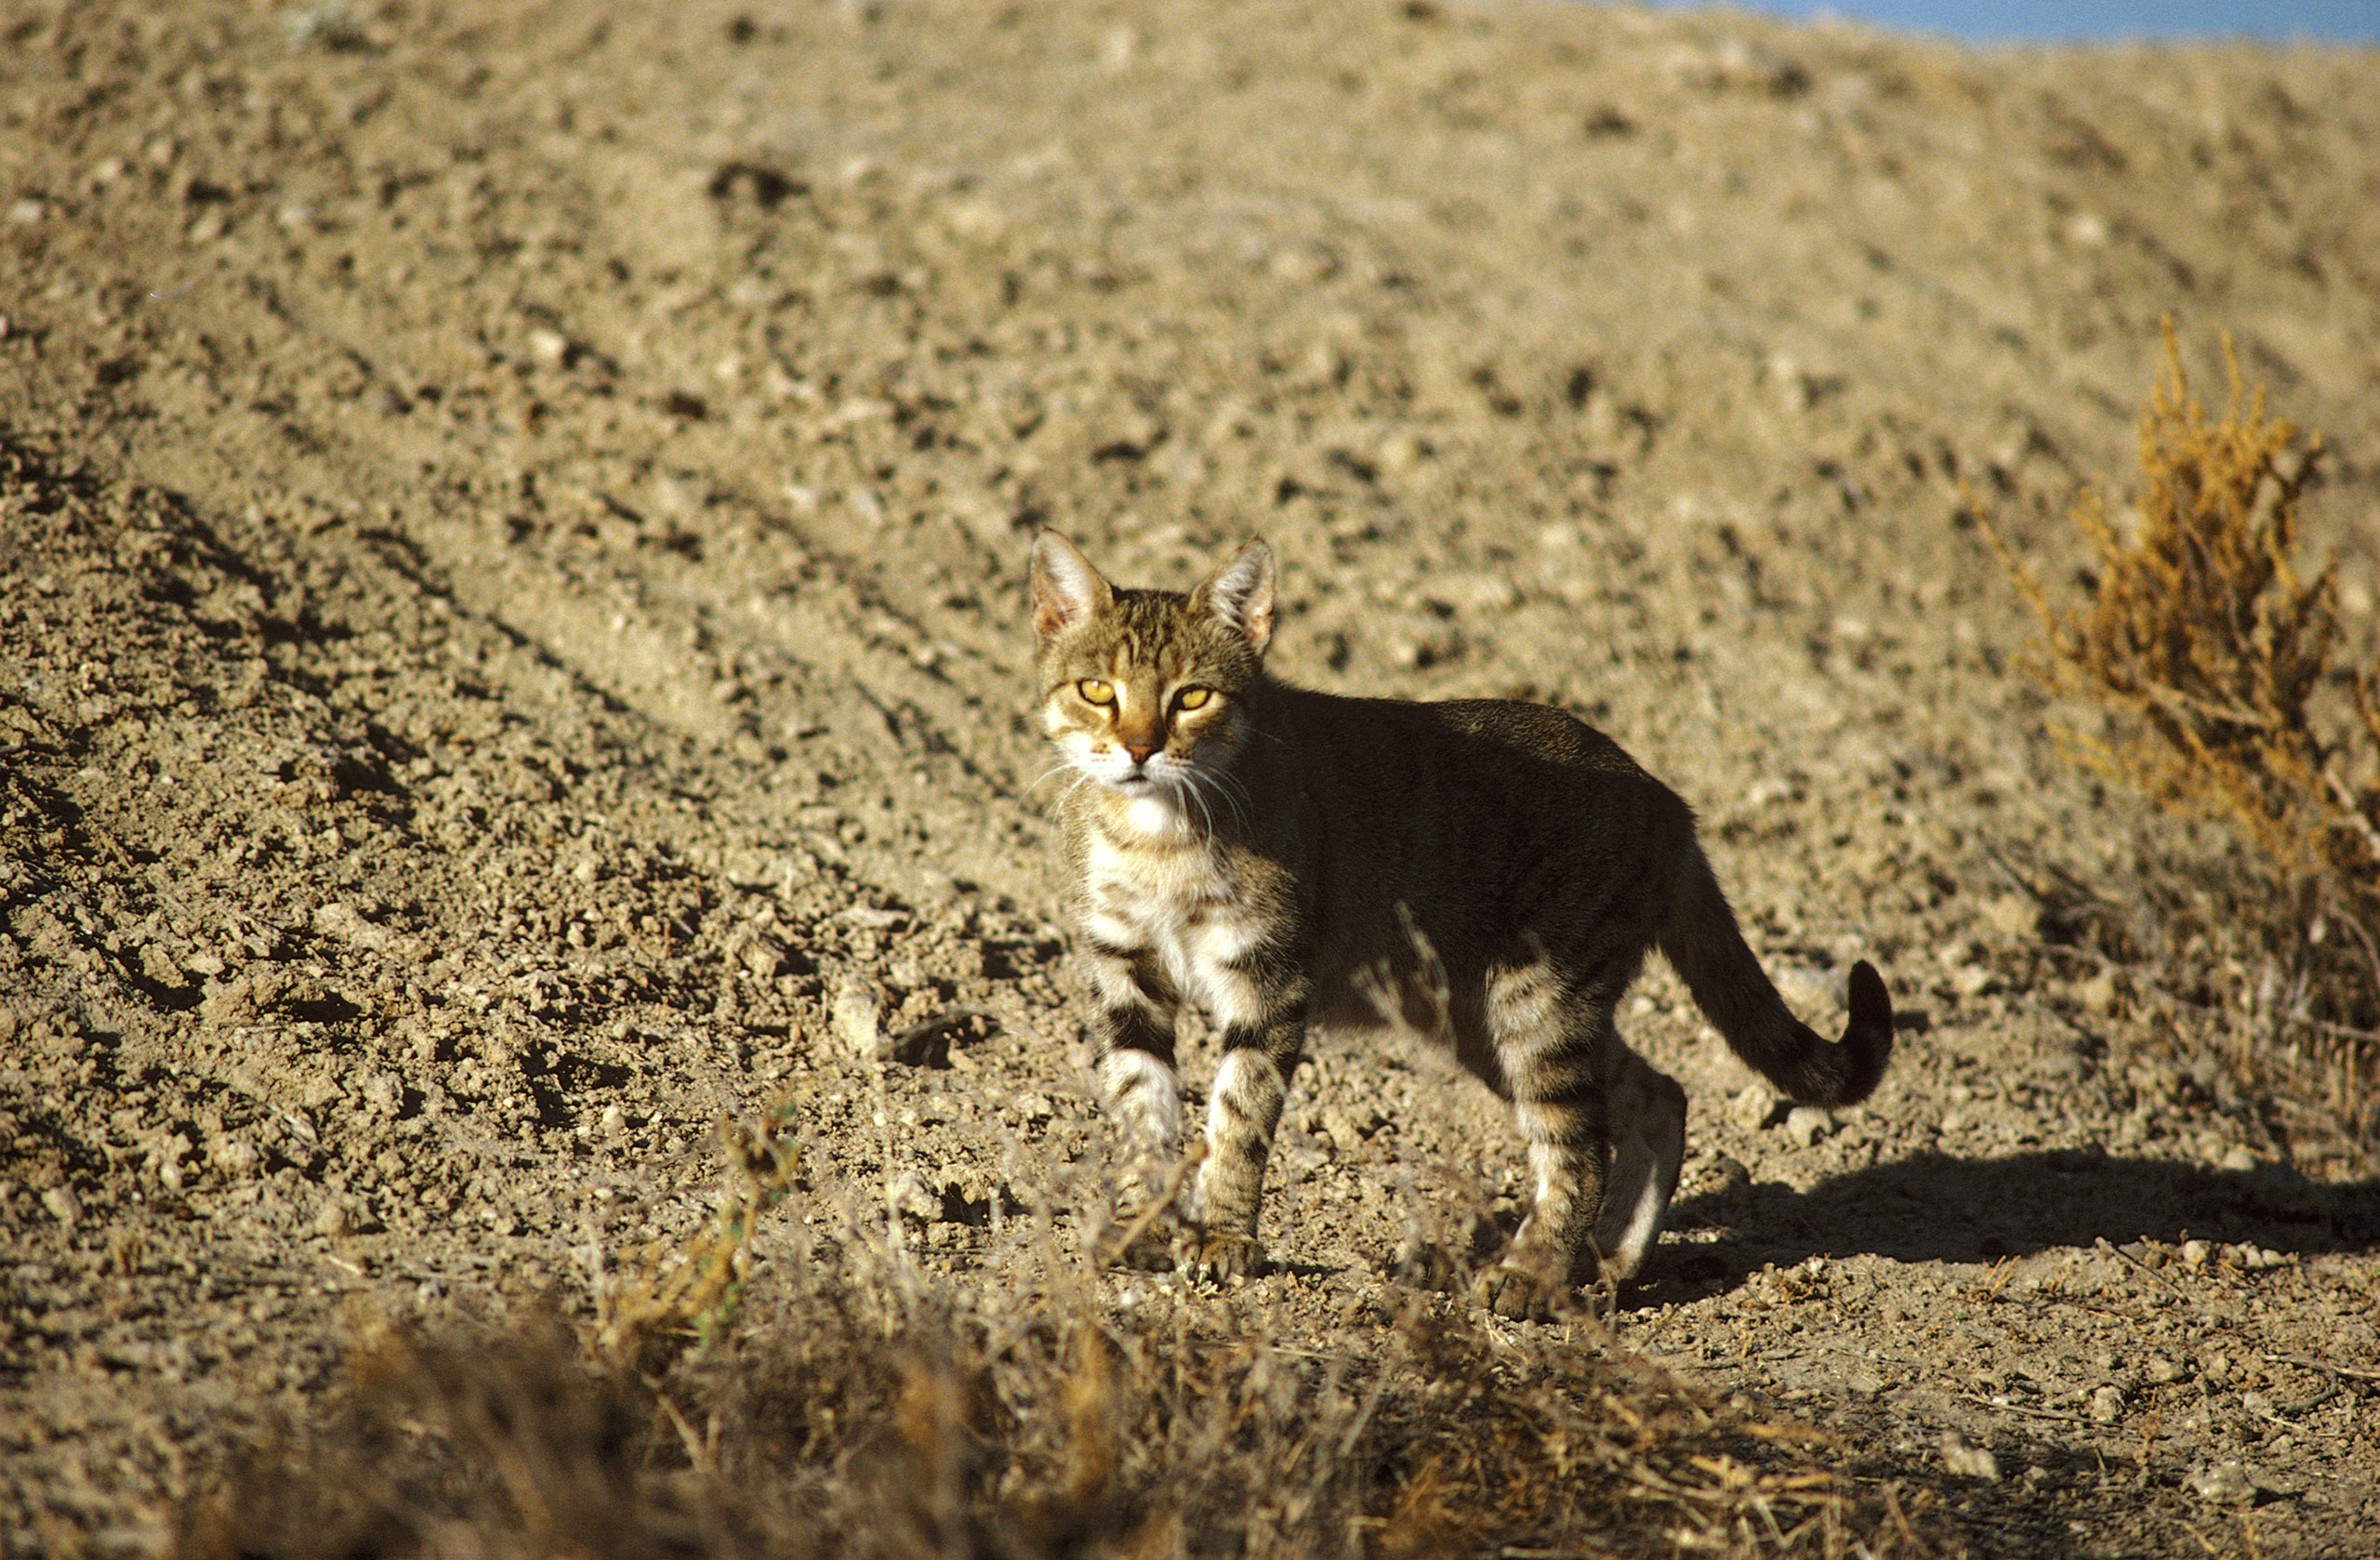 ekko styrte efter skole New Research: Australia's Serious Feral Cat Problem | Time